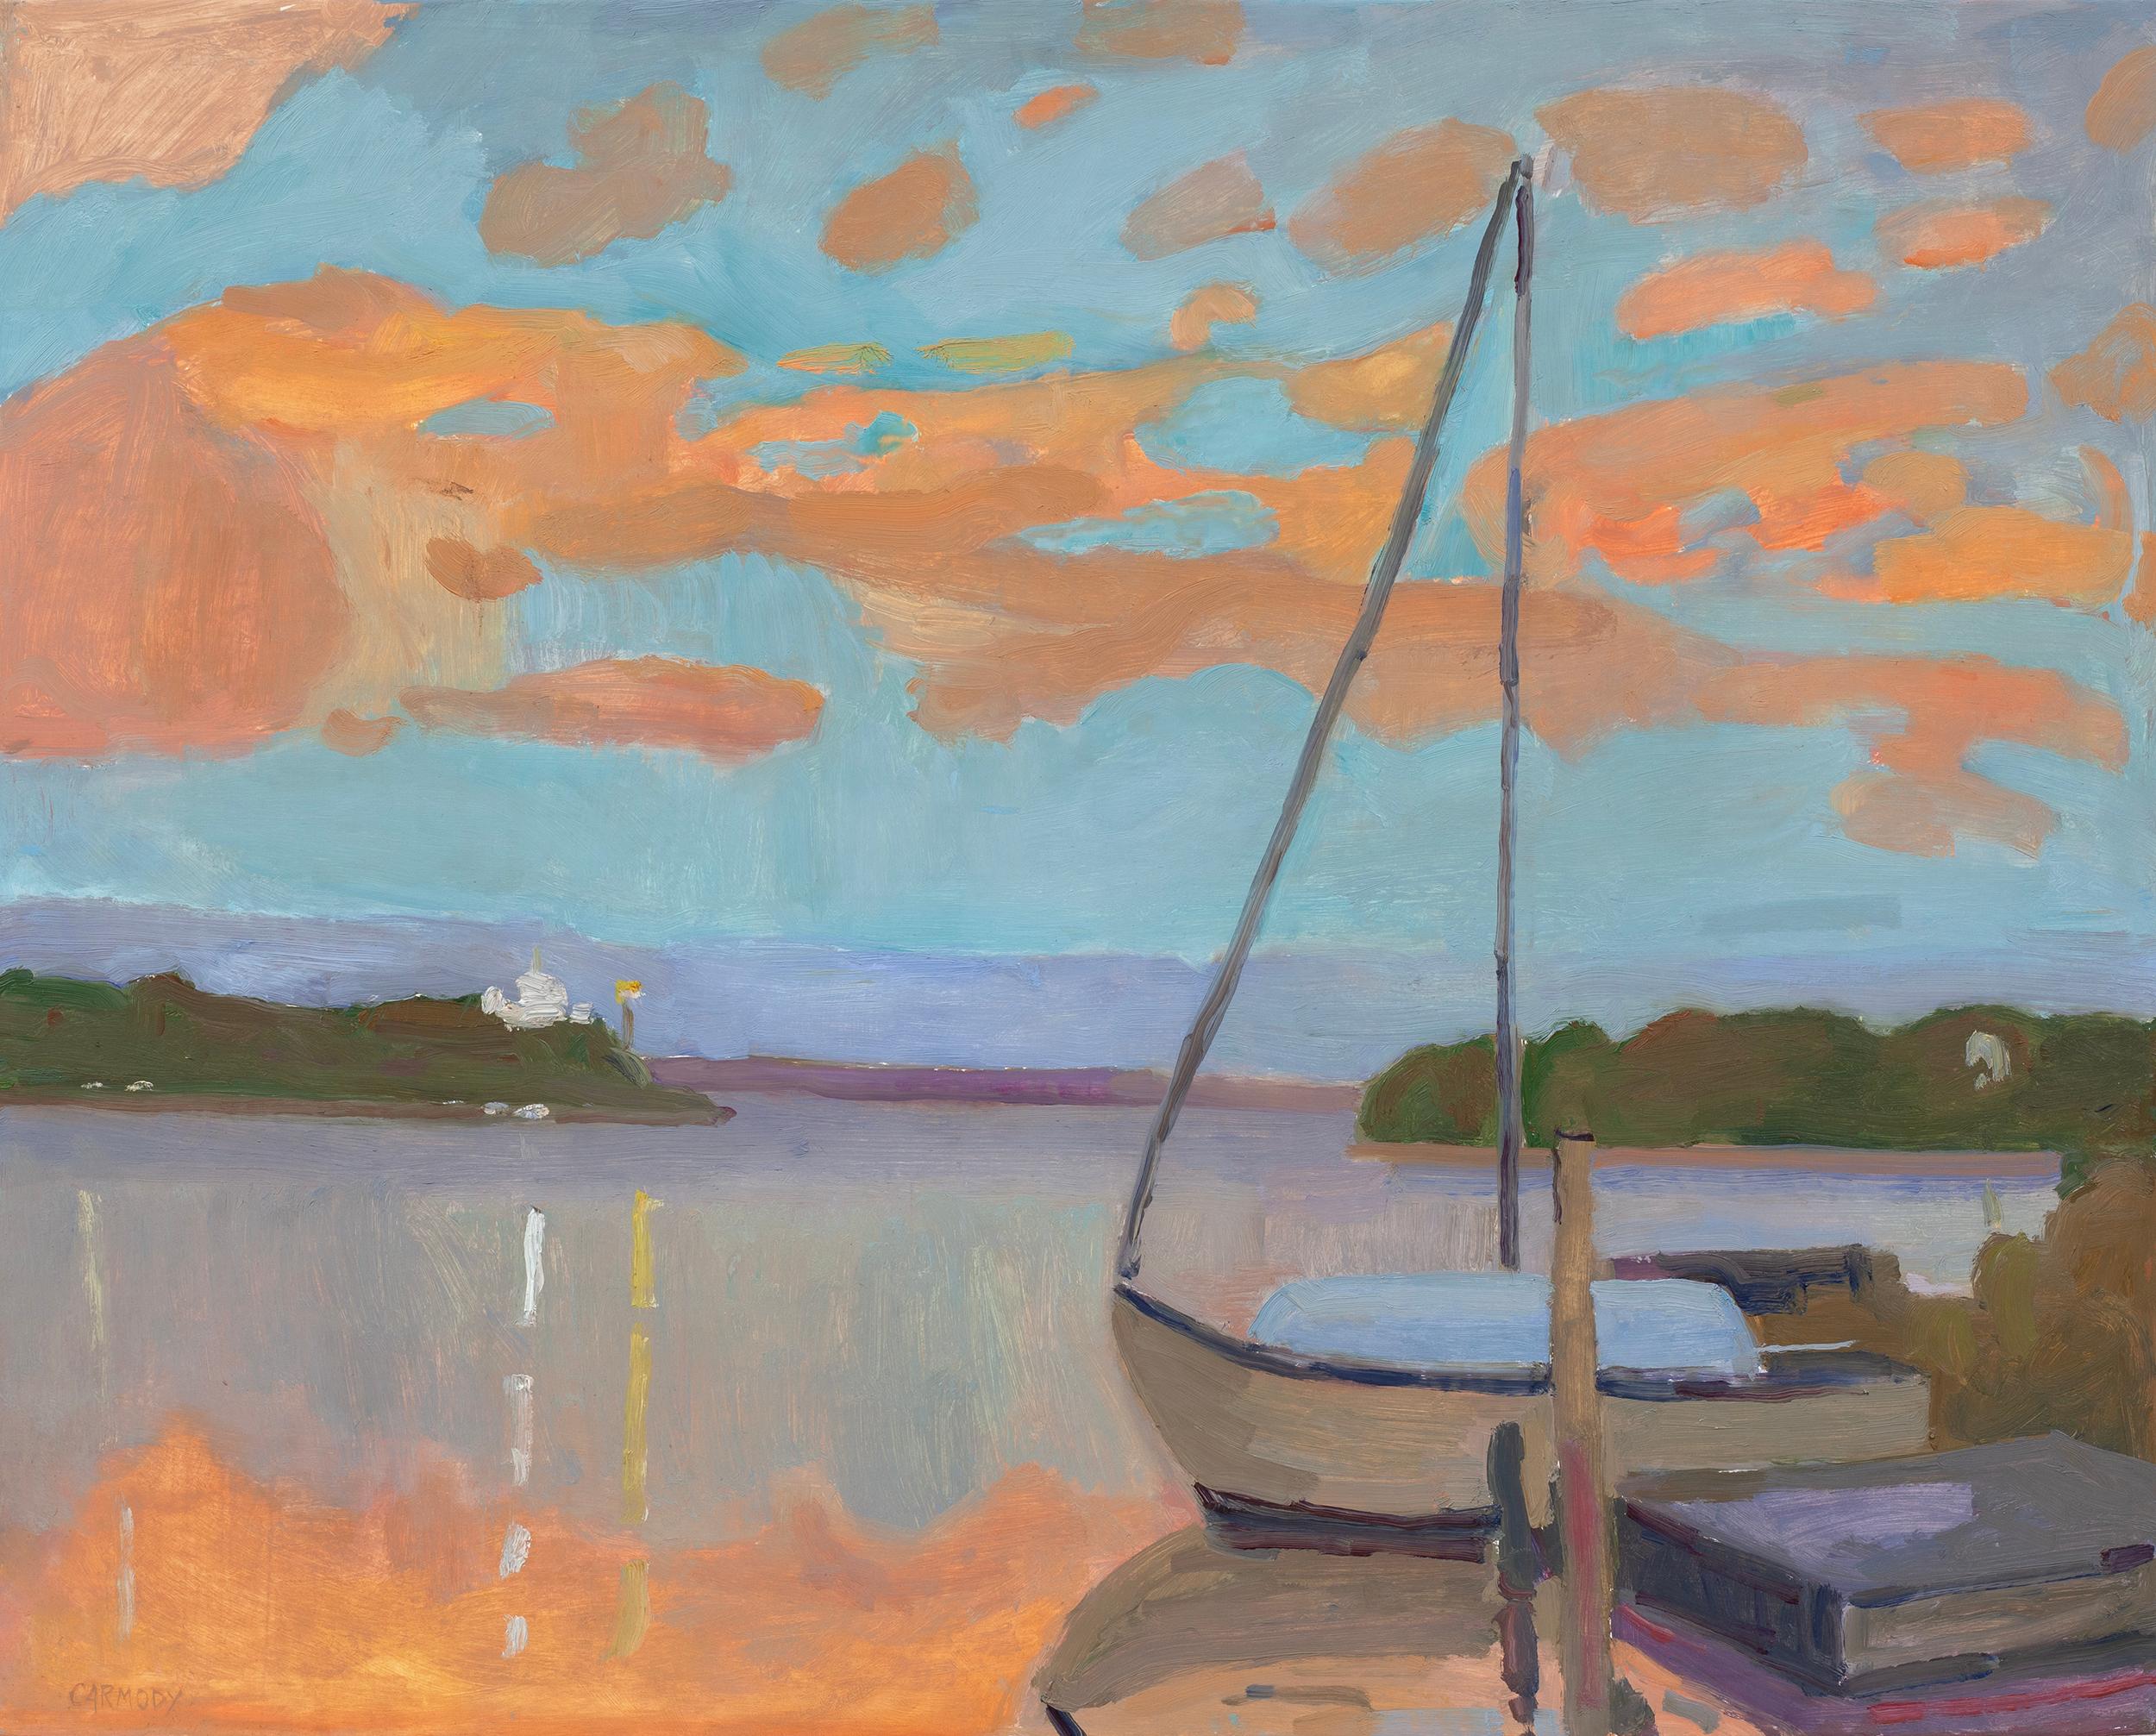 Abstract Painting Kelly Carmody - "Orange Clouds" Paysage marin contemporain américain avec voilier, soirée.